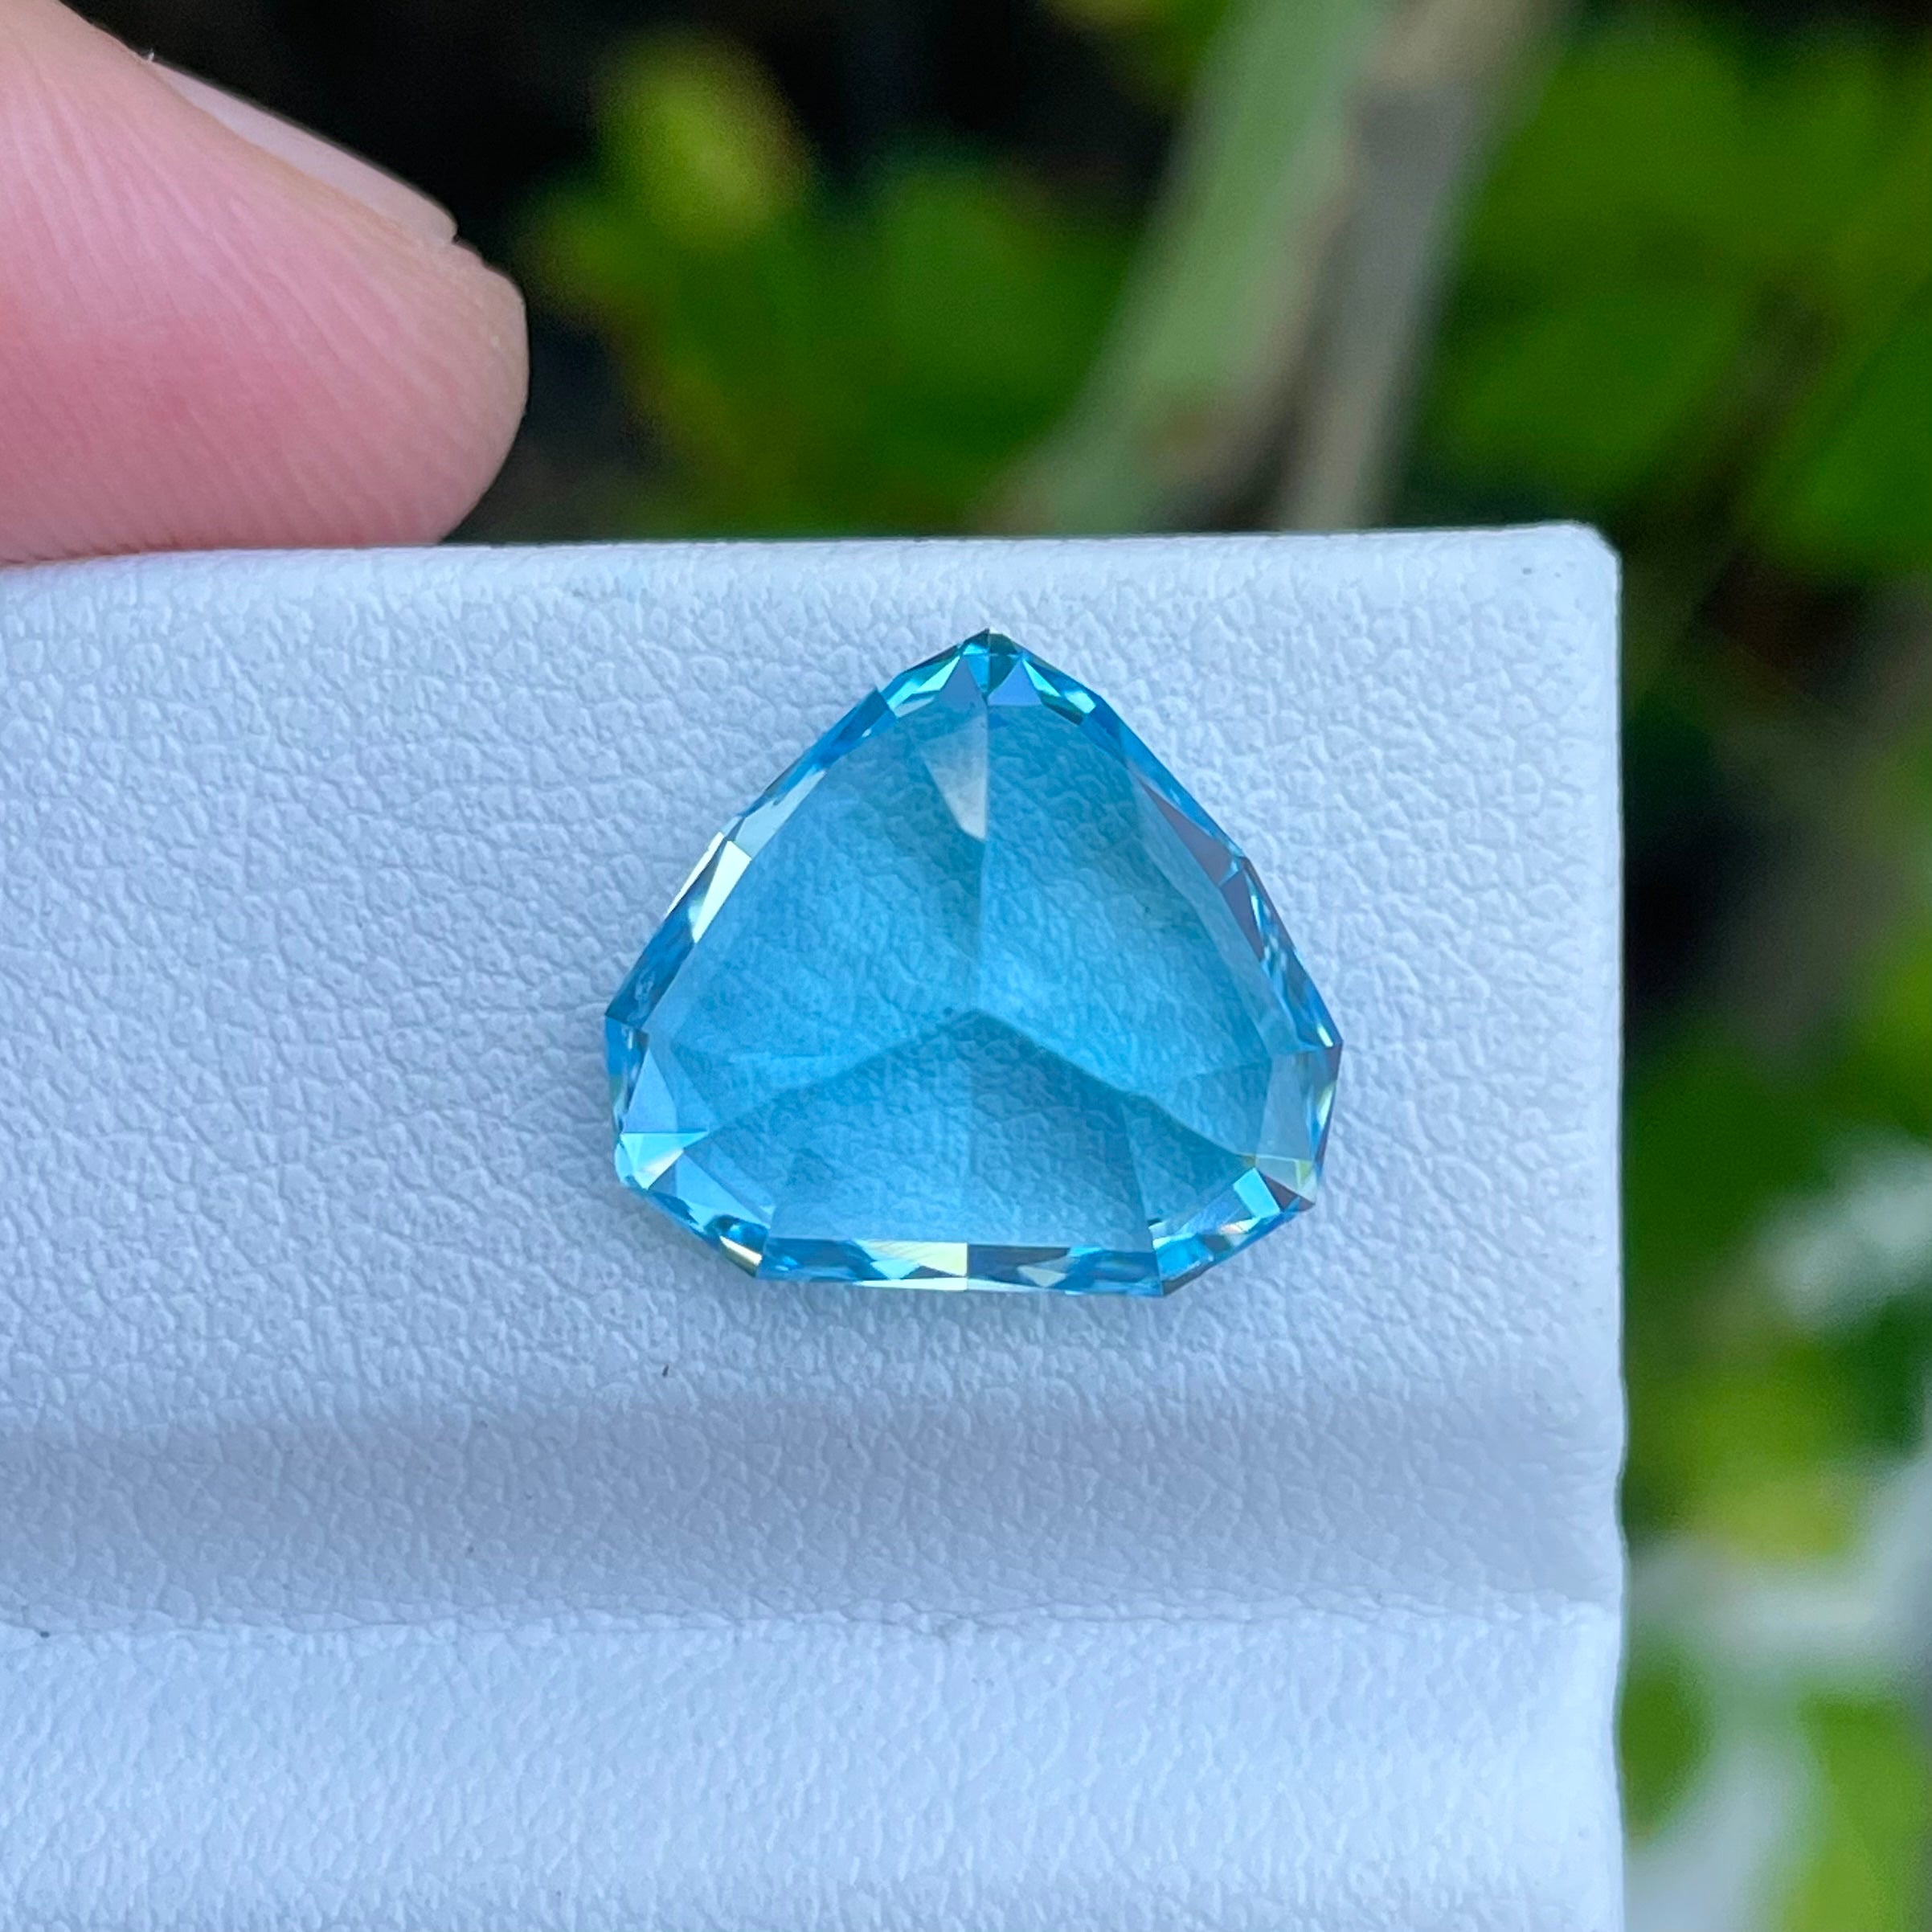 Genuine Fancy Cut Swiss Blue Topaz 9.95 carats Natural Madagascar's Gemstone